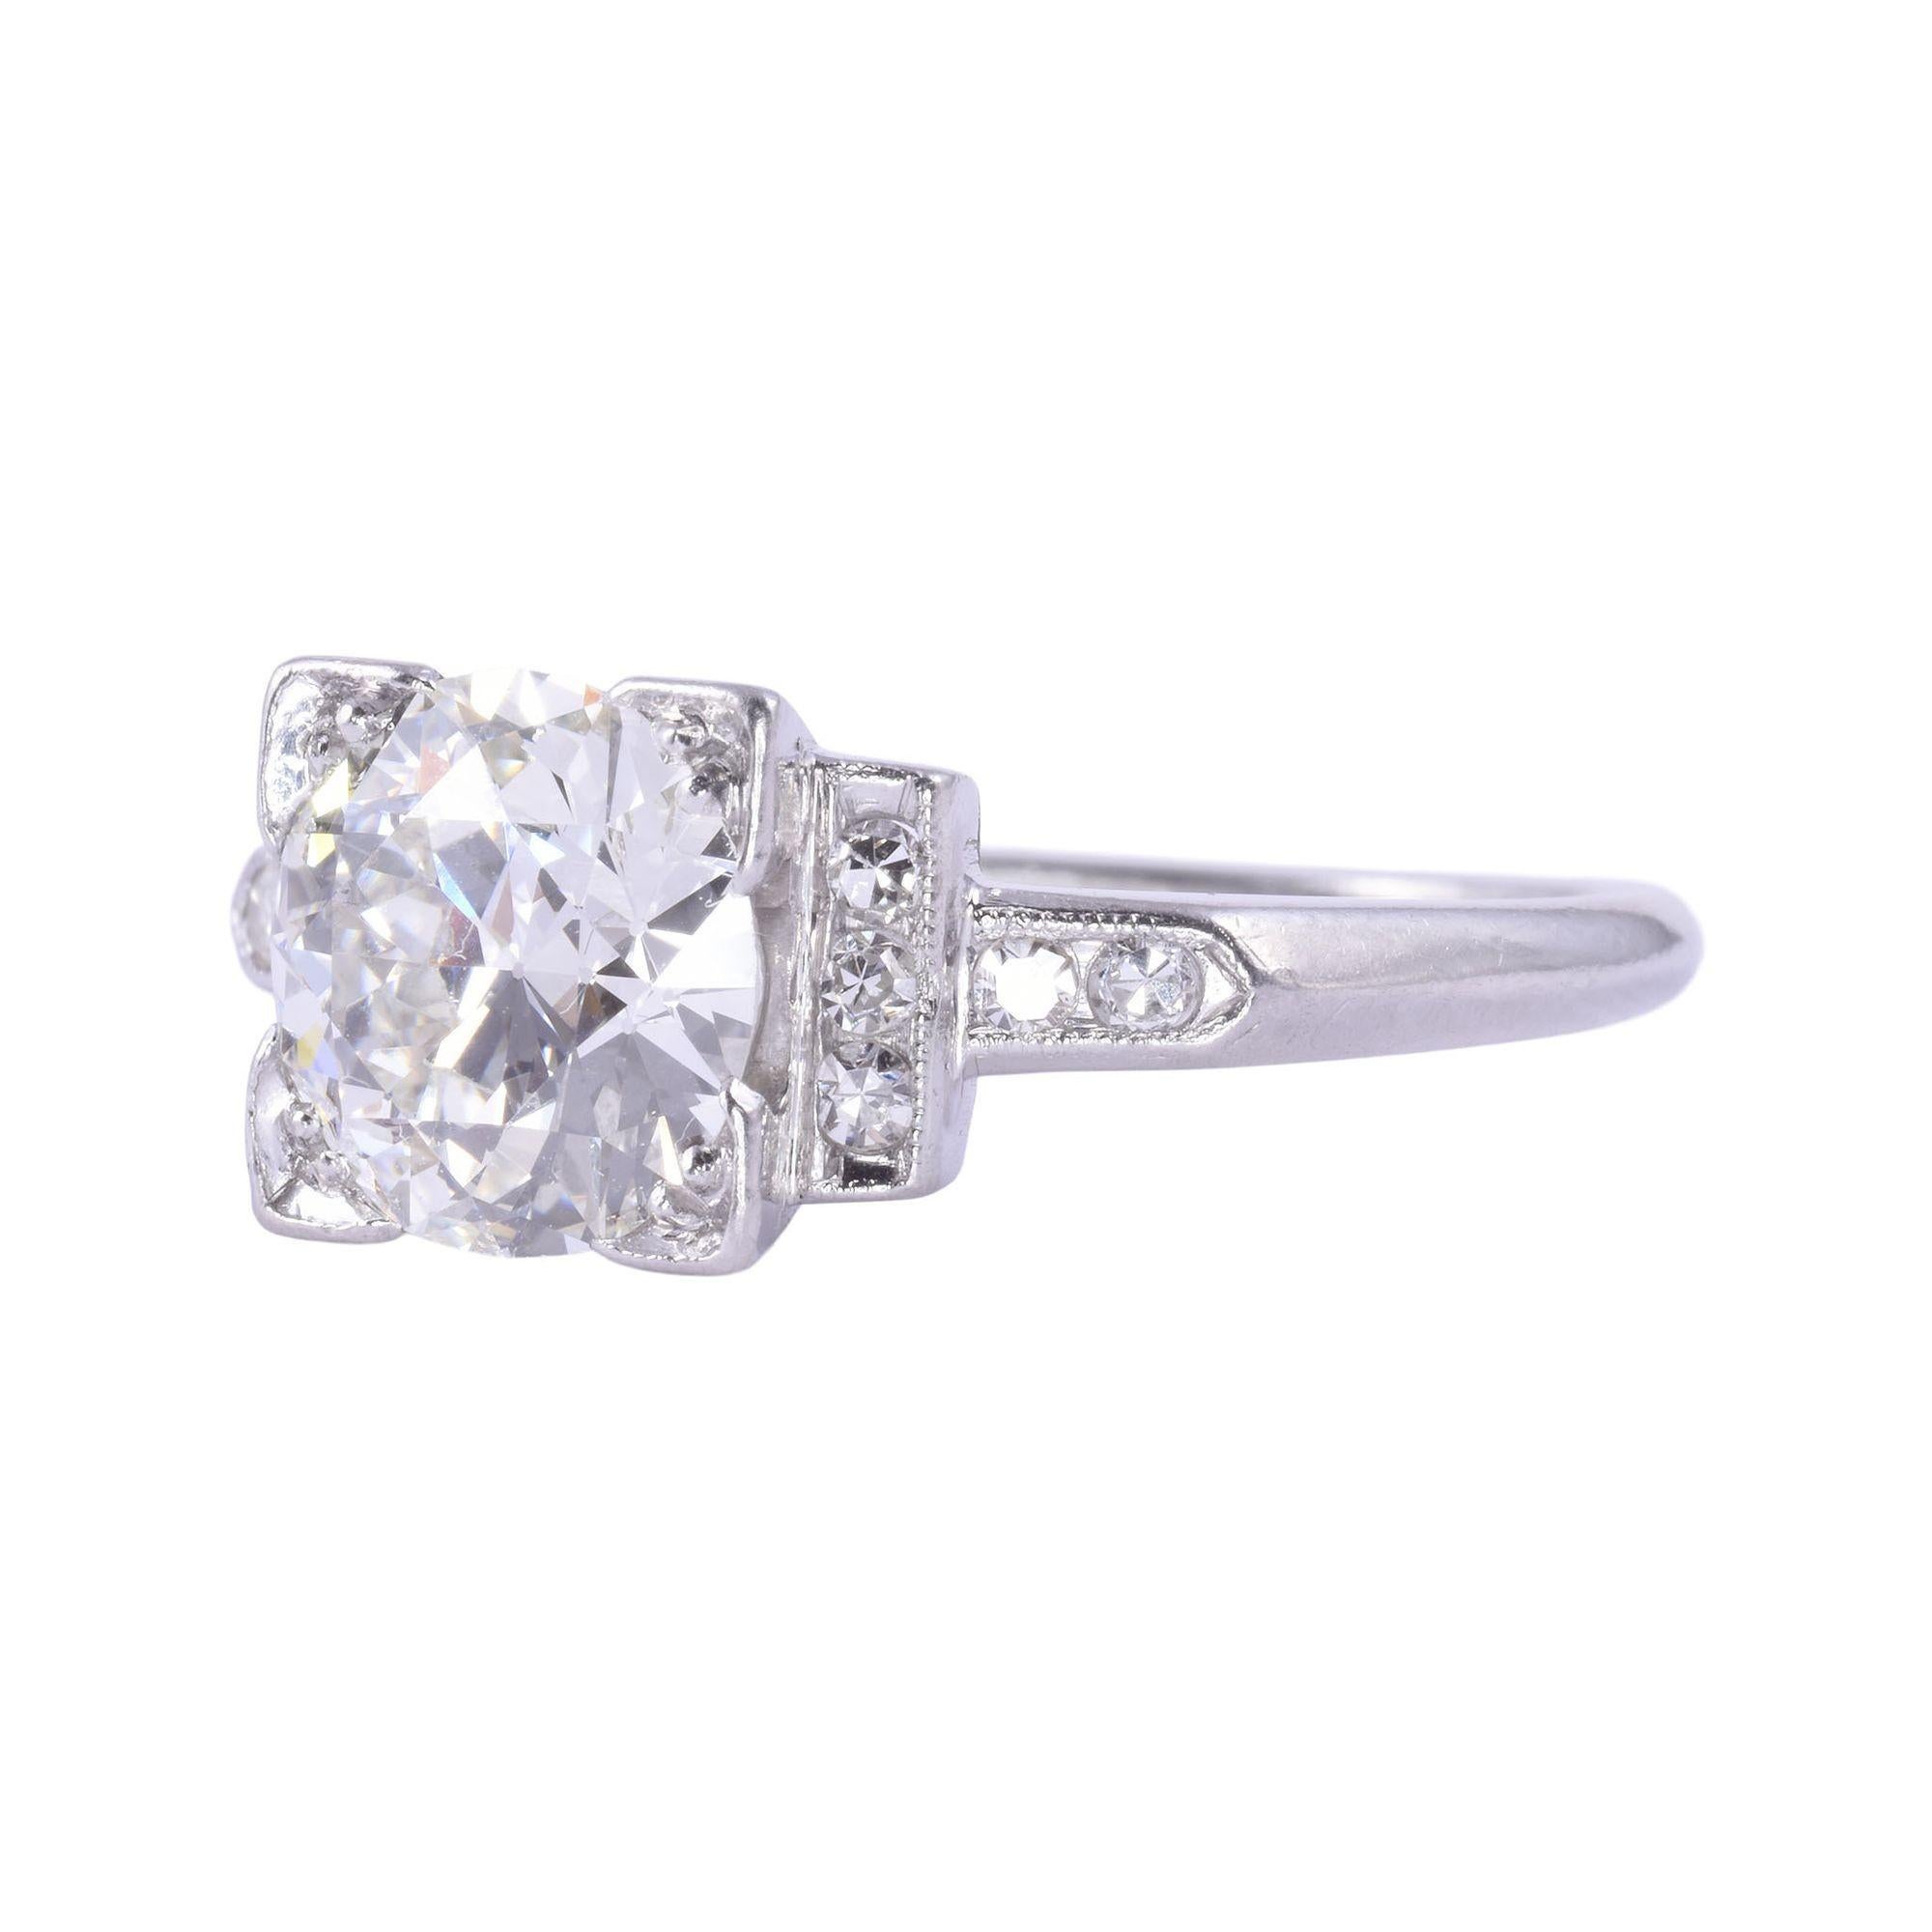 Old European Cut Art Deco Platinum 1.95 Carat Center Diamond Engagement Ring For Sale